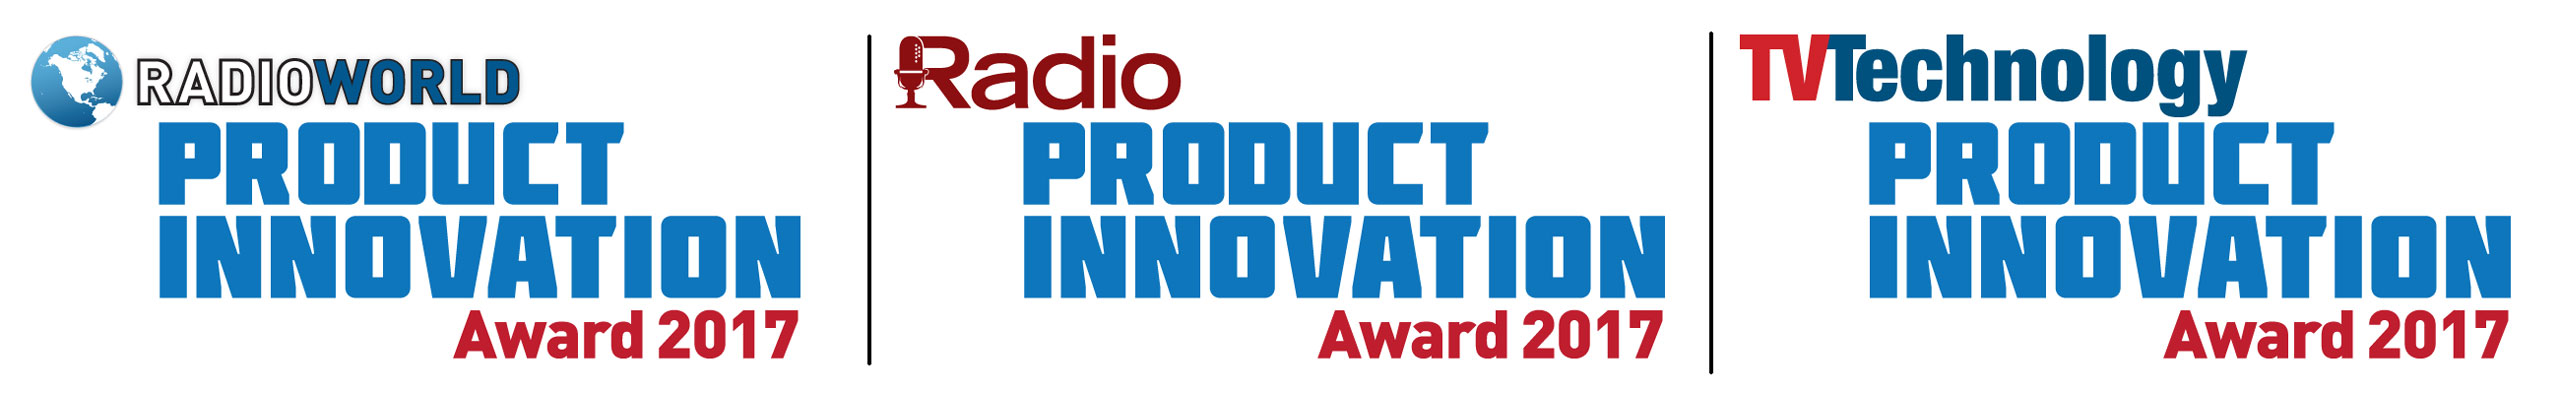 RW RADIO TVT Prod Innovation Award logo 2017 rev